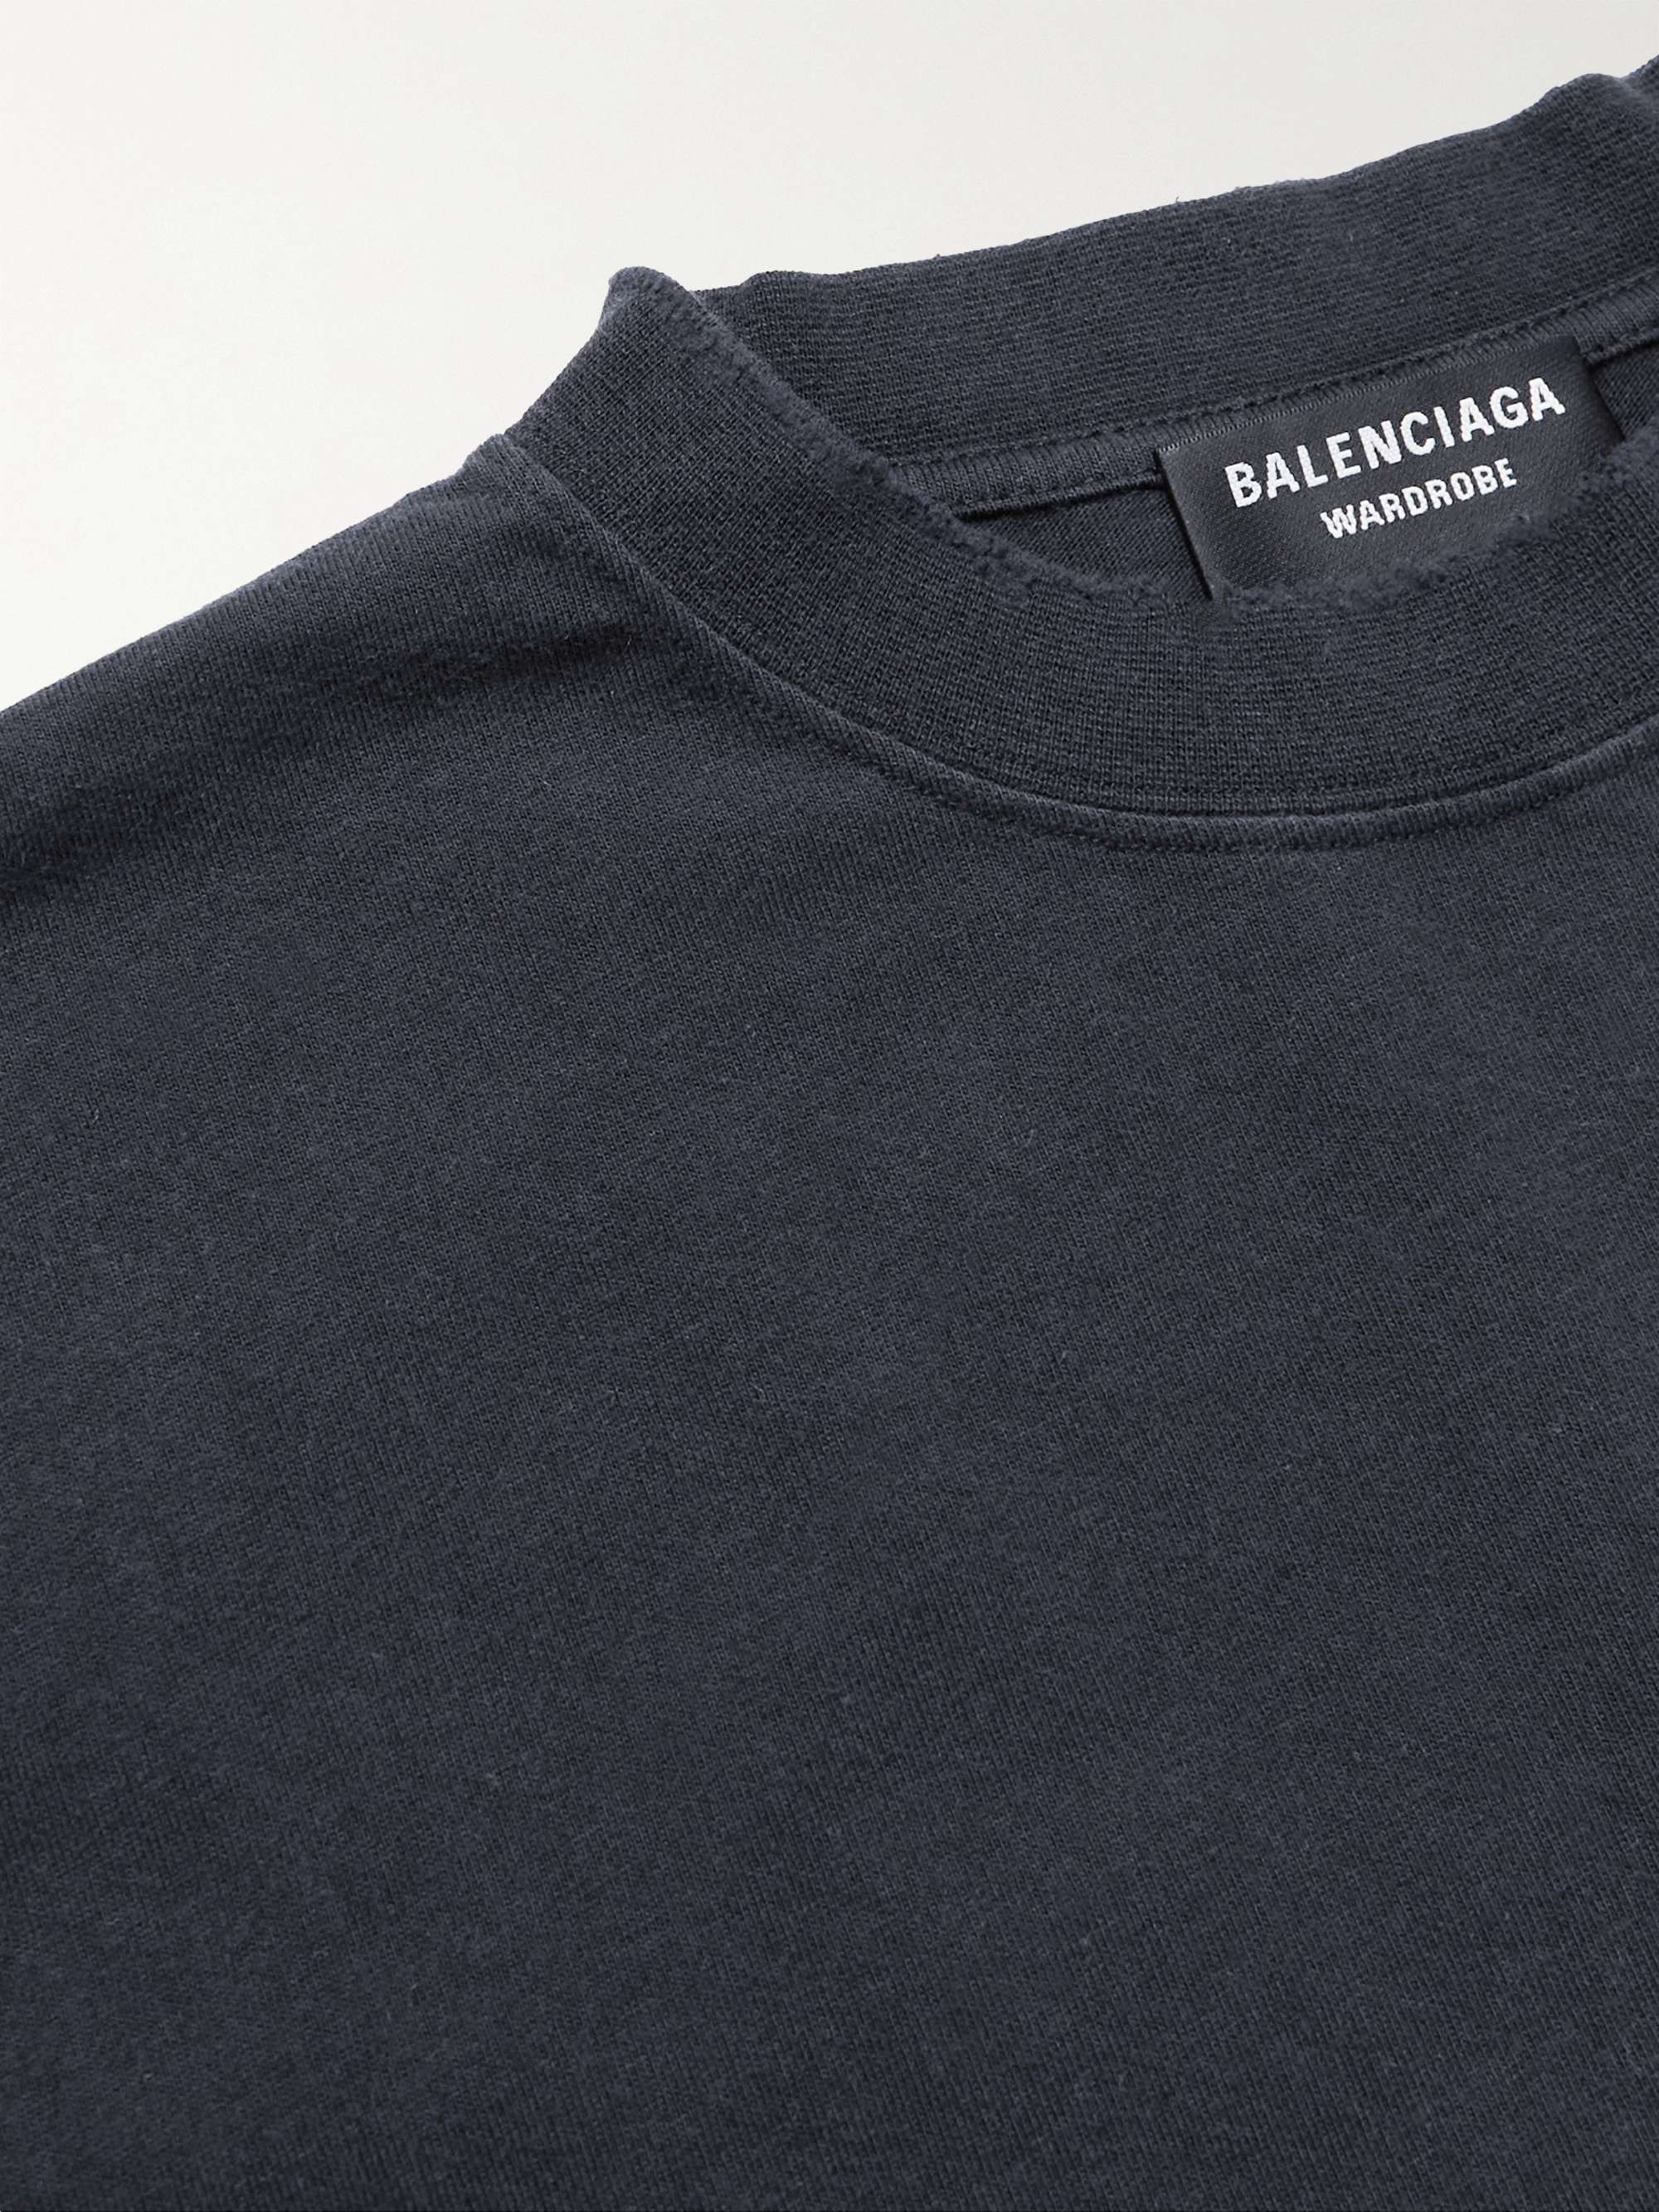 Balenciaga Oversized logo-embroidered Cotton-Jersey T-Shirt - Men - Black T-shirts - M